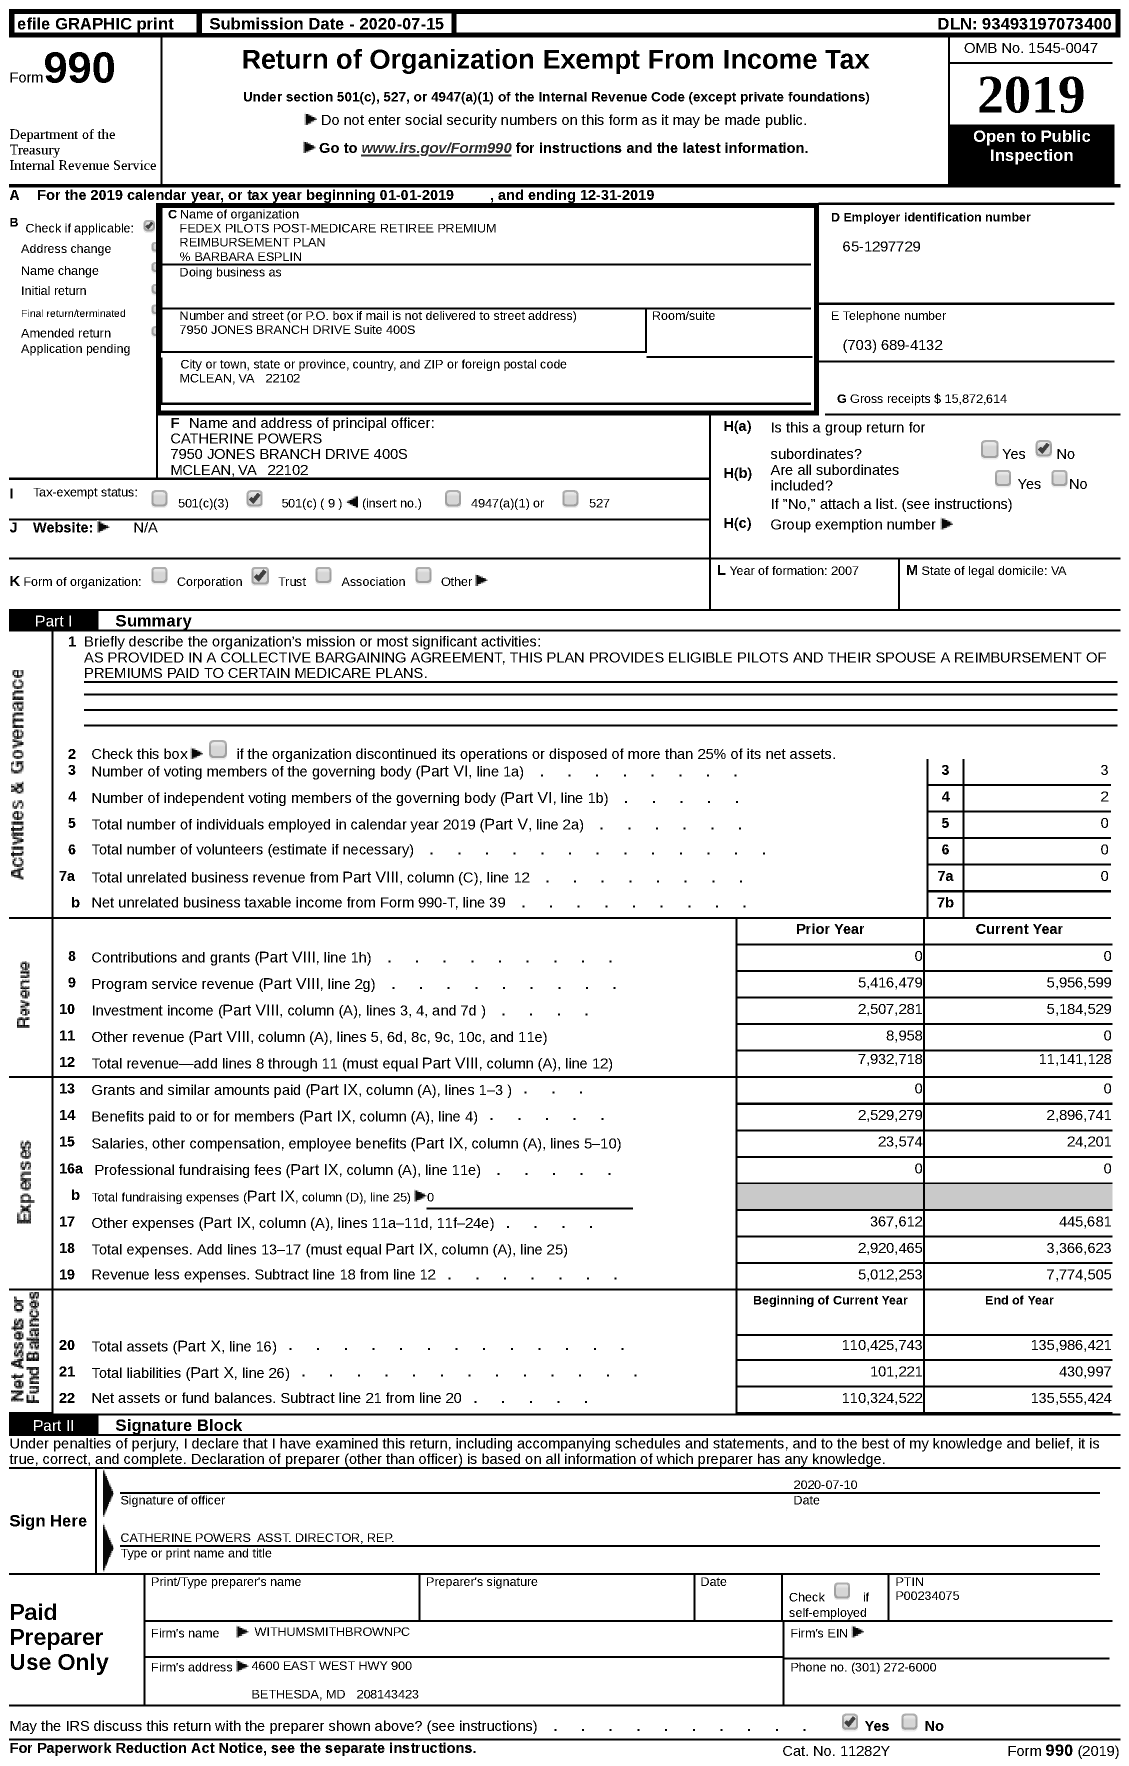 Image of first page of 2019 Form 990 for Fedex Pilots Post-Medicare Retiree Premium Reimbursement Plan